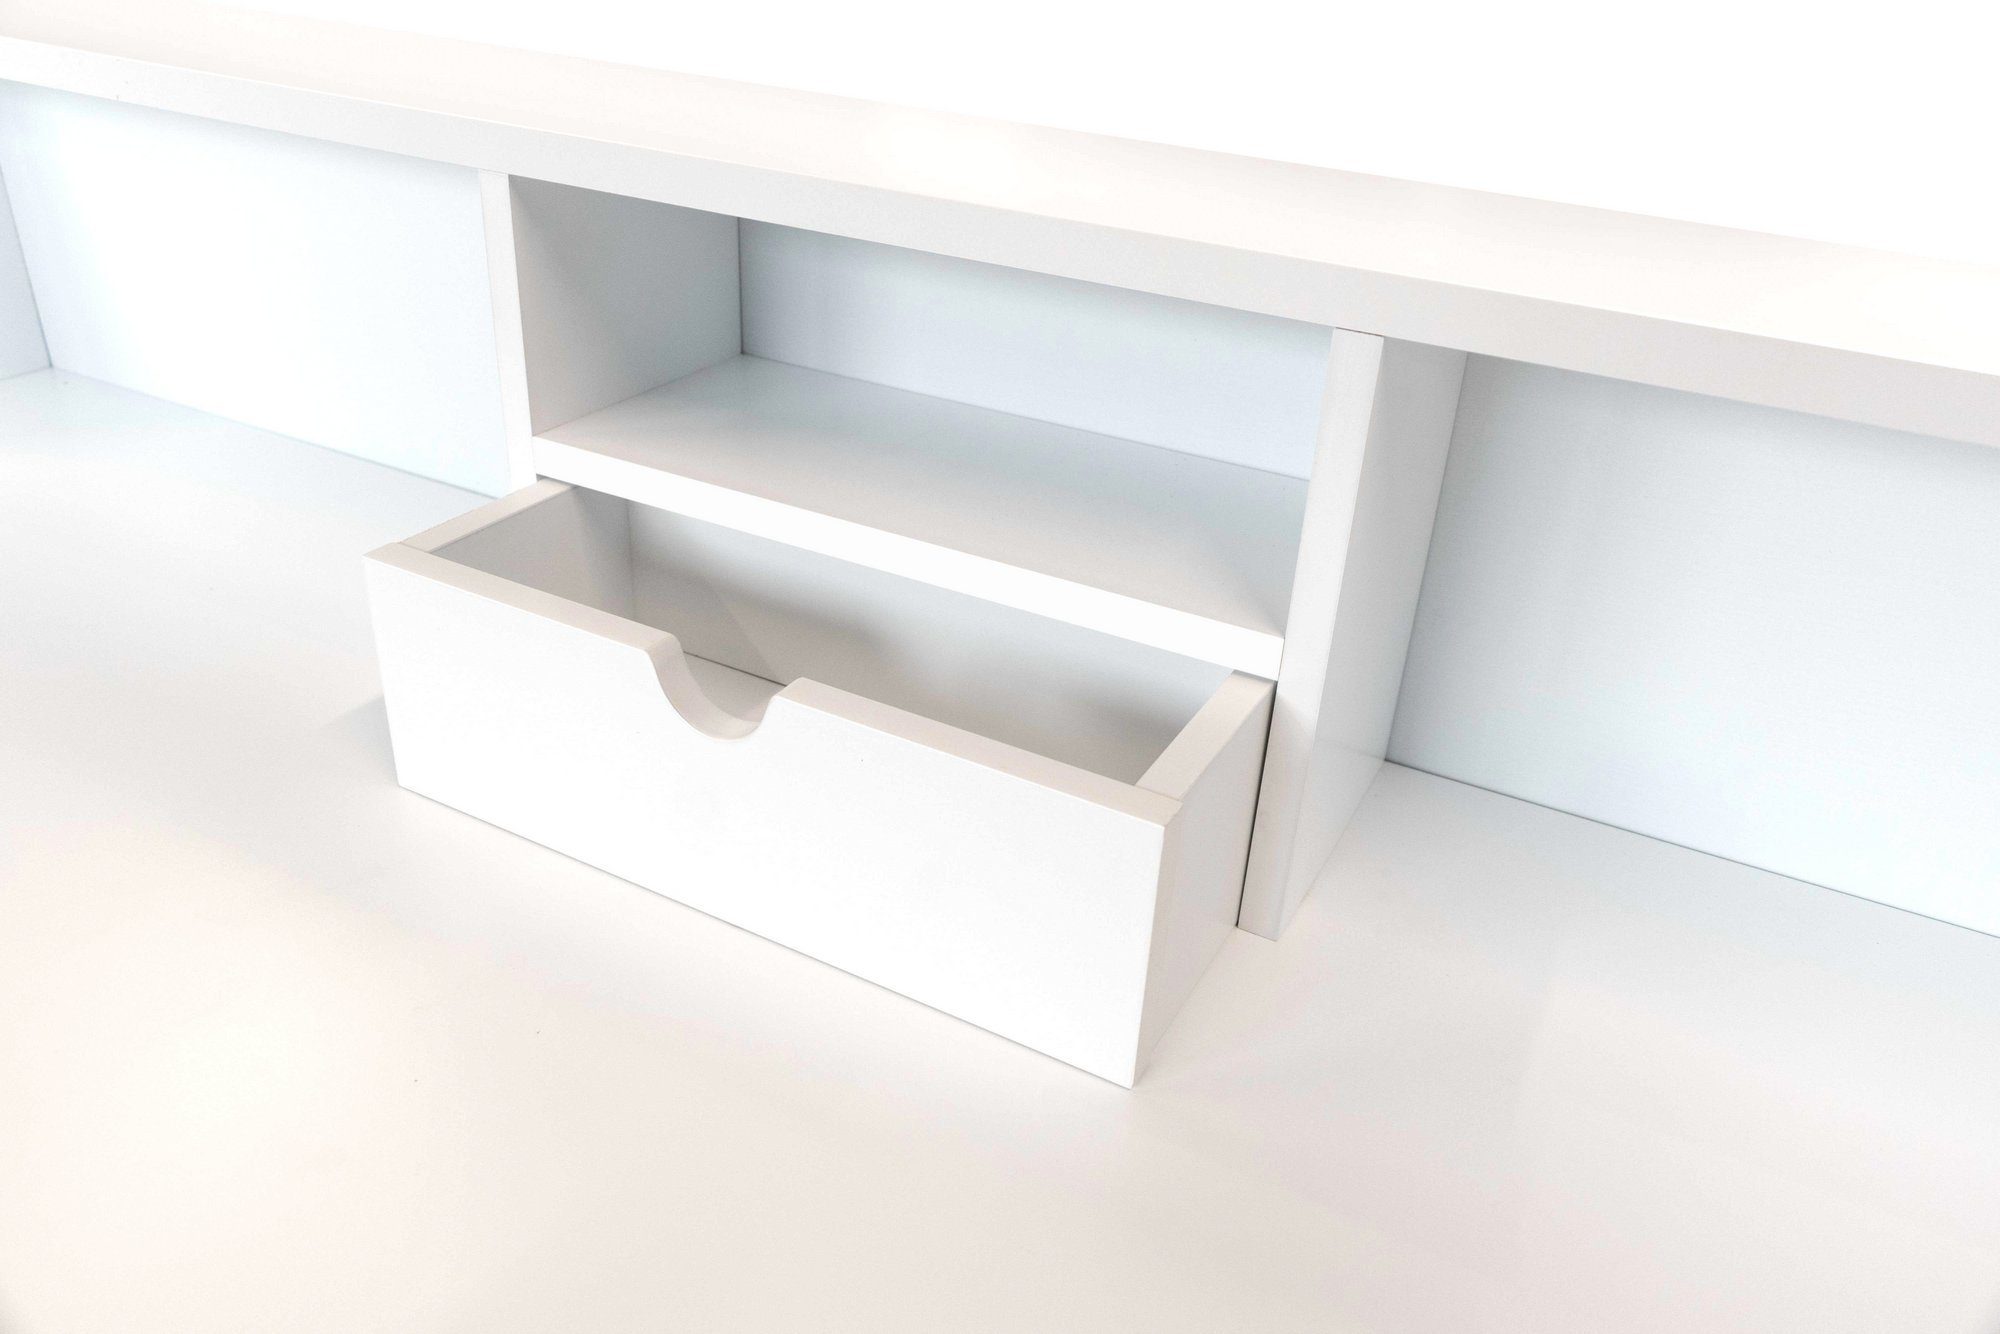 Computertisch Schreibtisch skandinavisch 120cm weiß Badregal osoltus osoltus Design